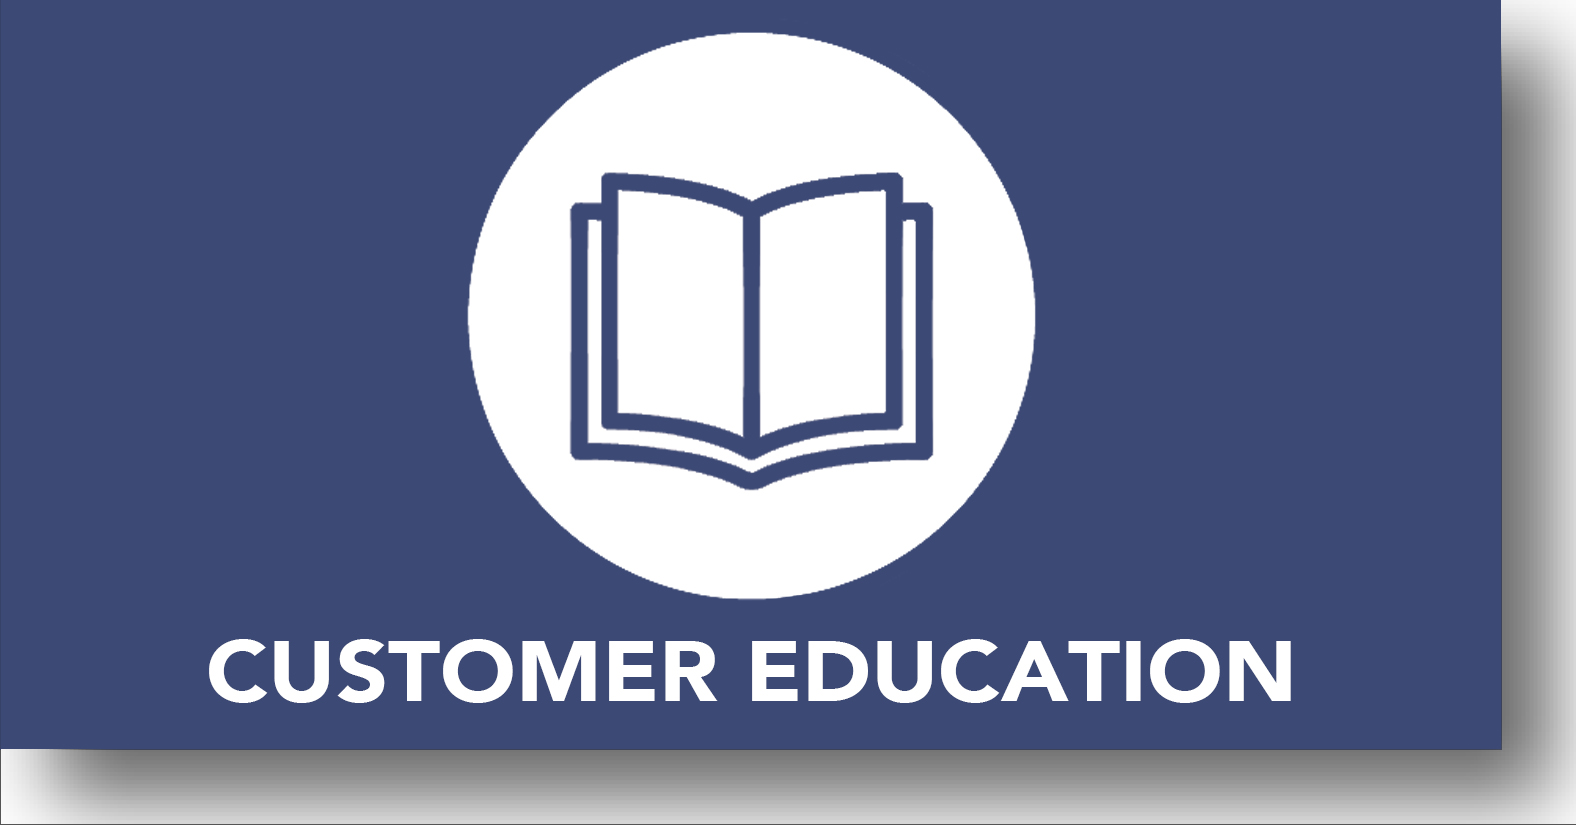 Customer Education